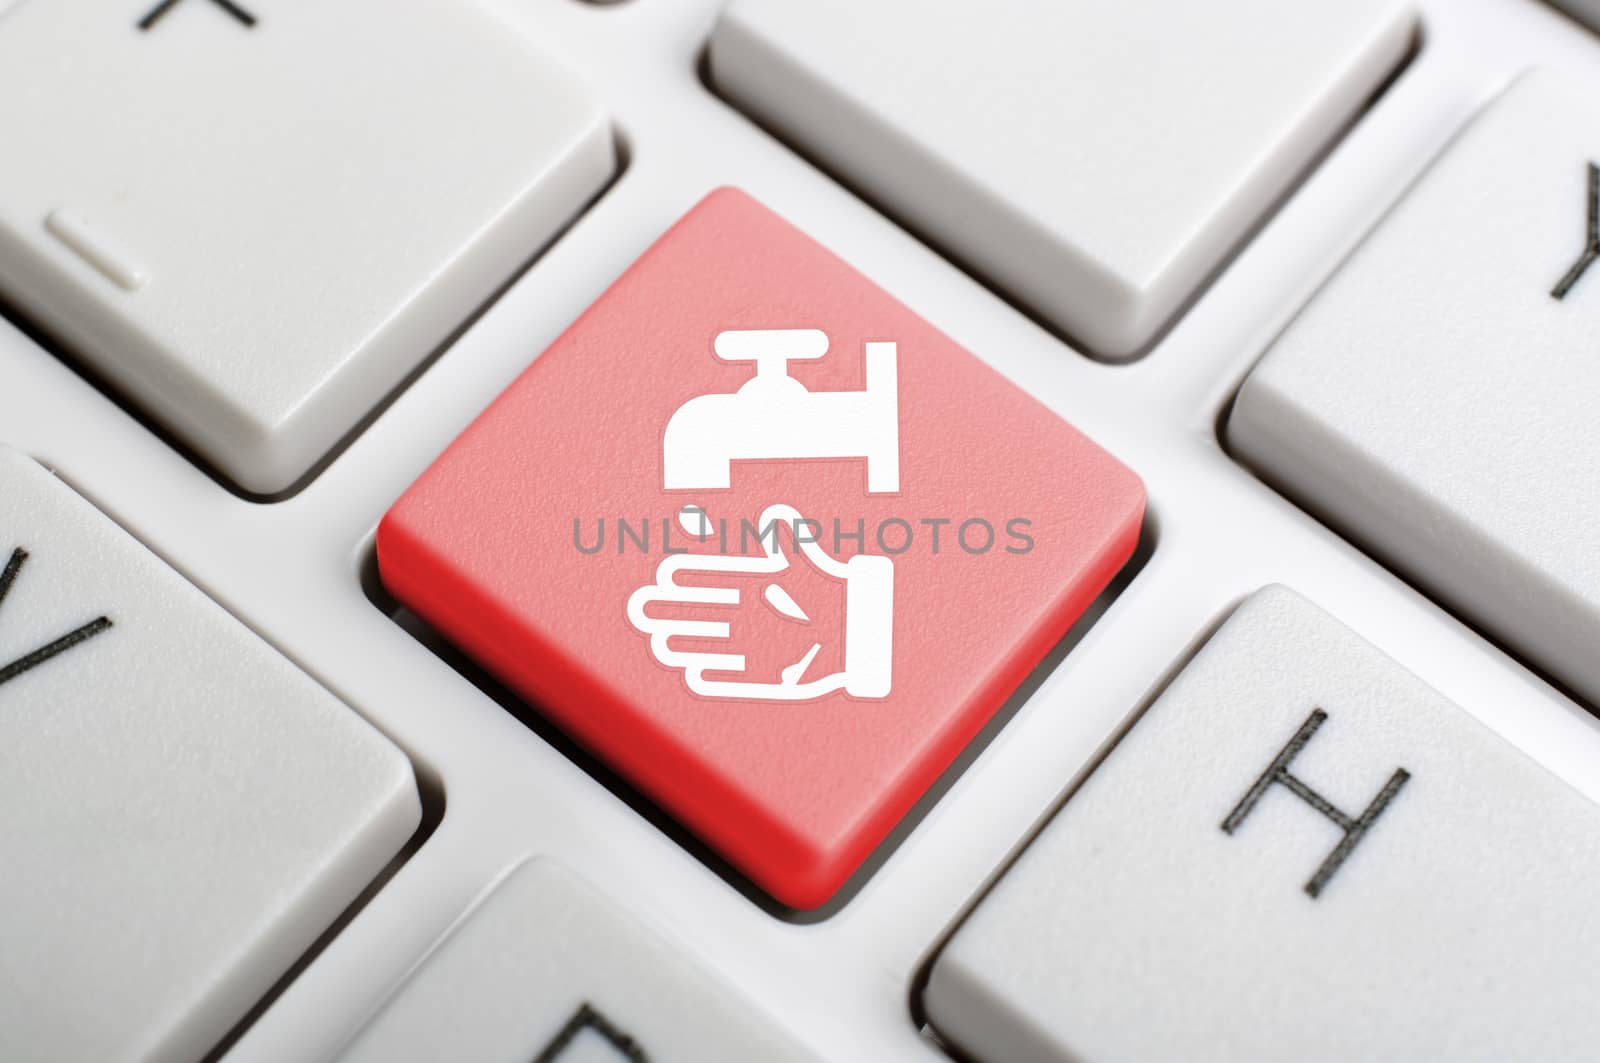 Red wash hand key on keyboard